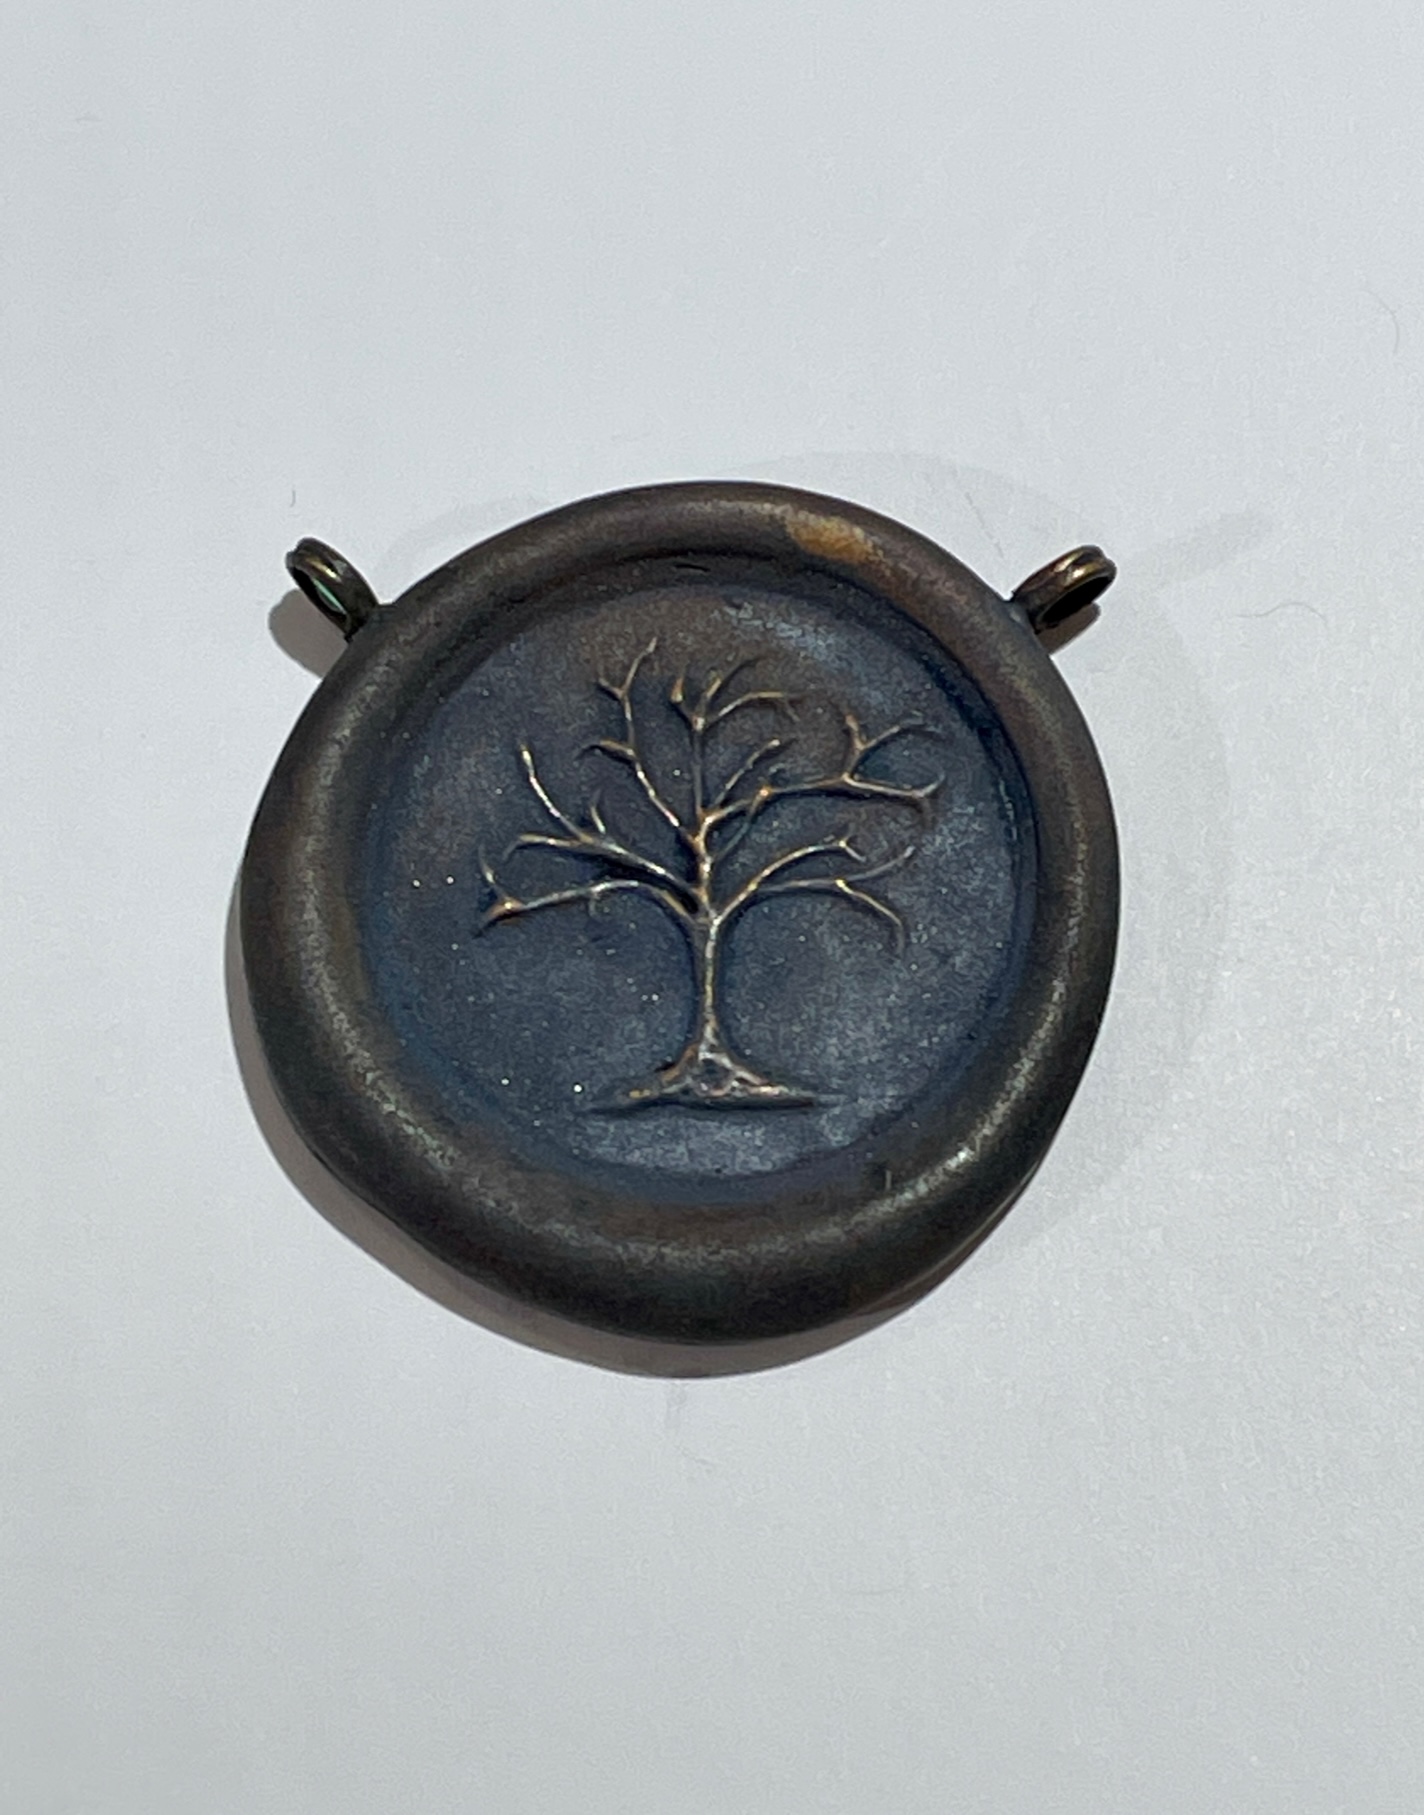 Medium Tree of Legends Bronze Centerpiece with Black Oxidized Patina